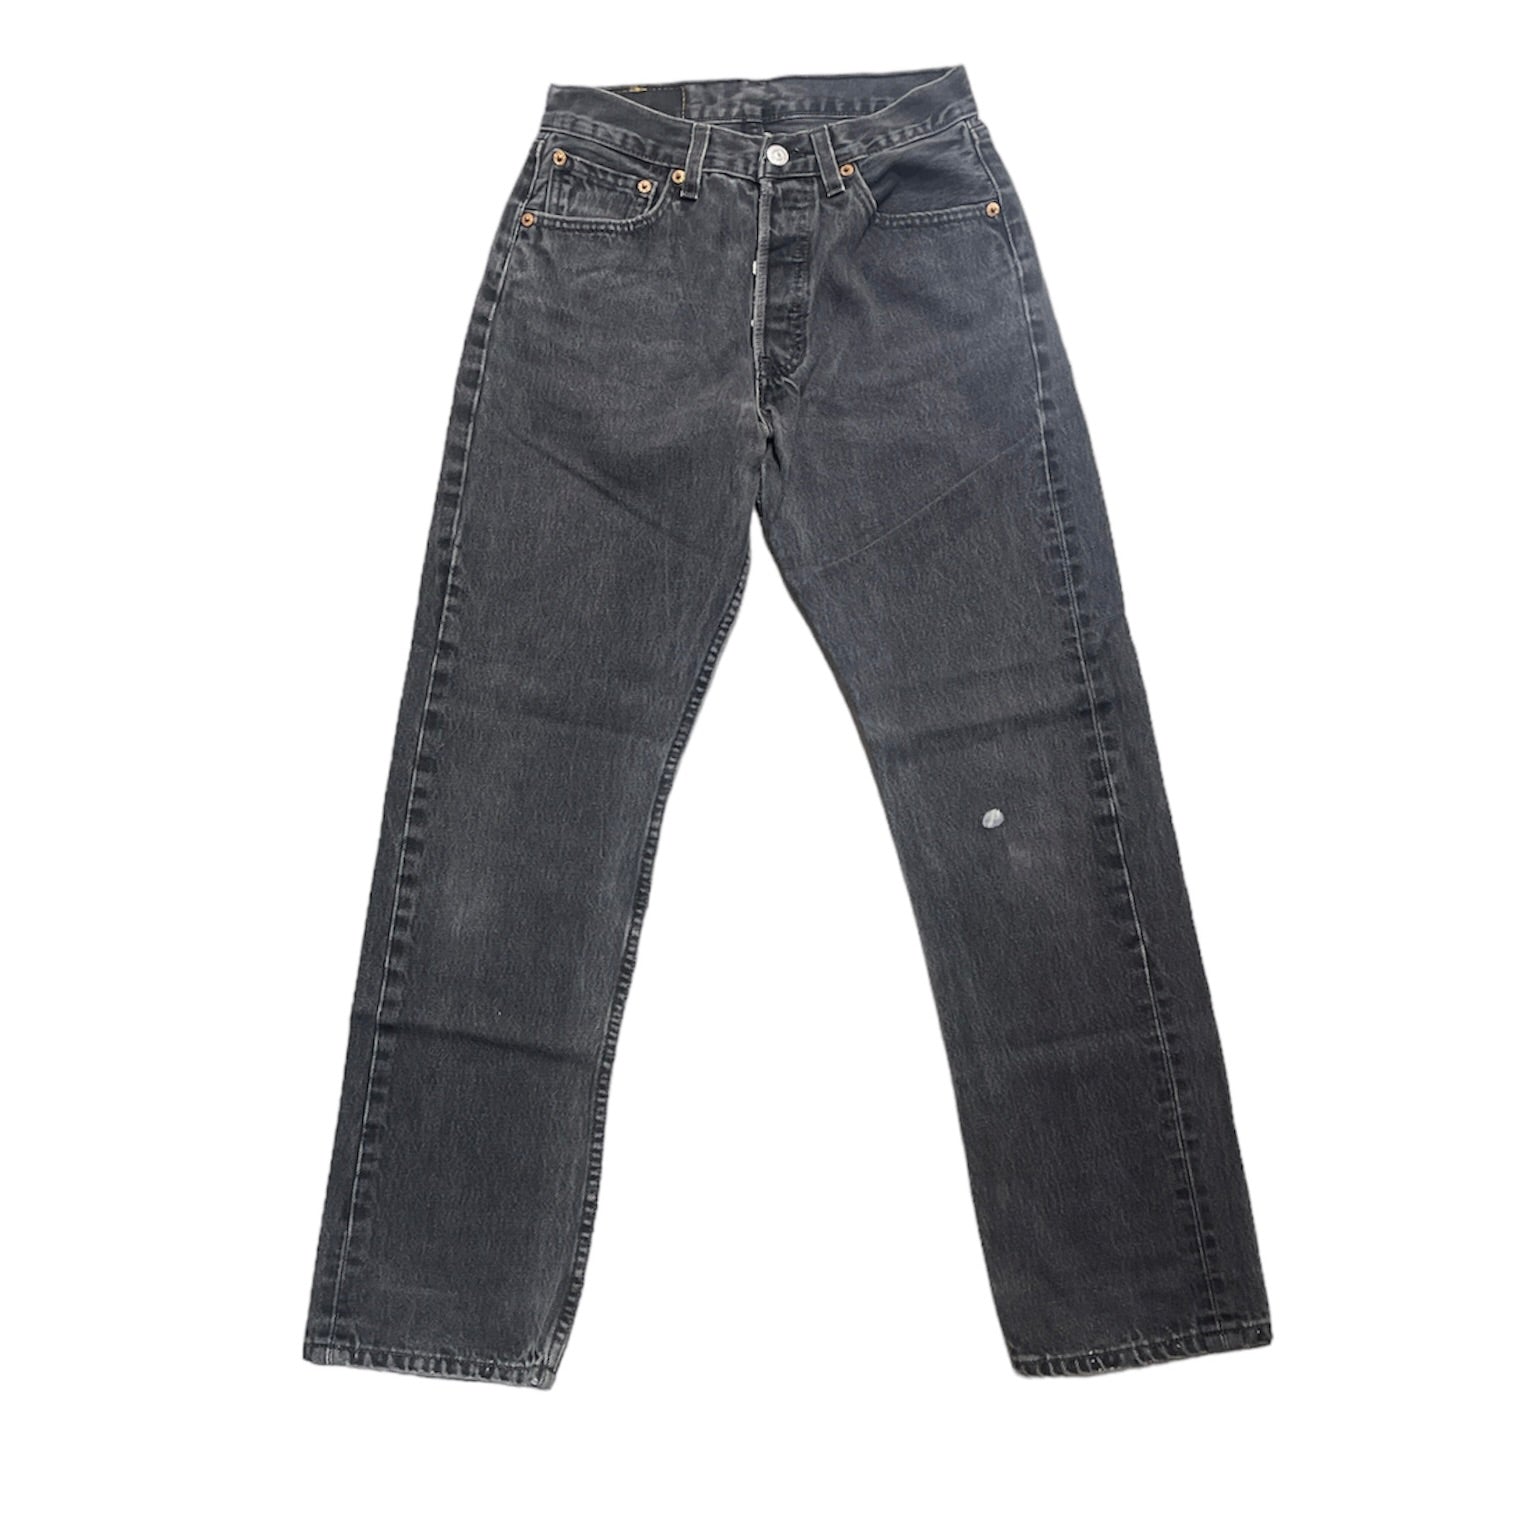 Vintage Levis 501 Vintage Grey Jeans (W28/L30)